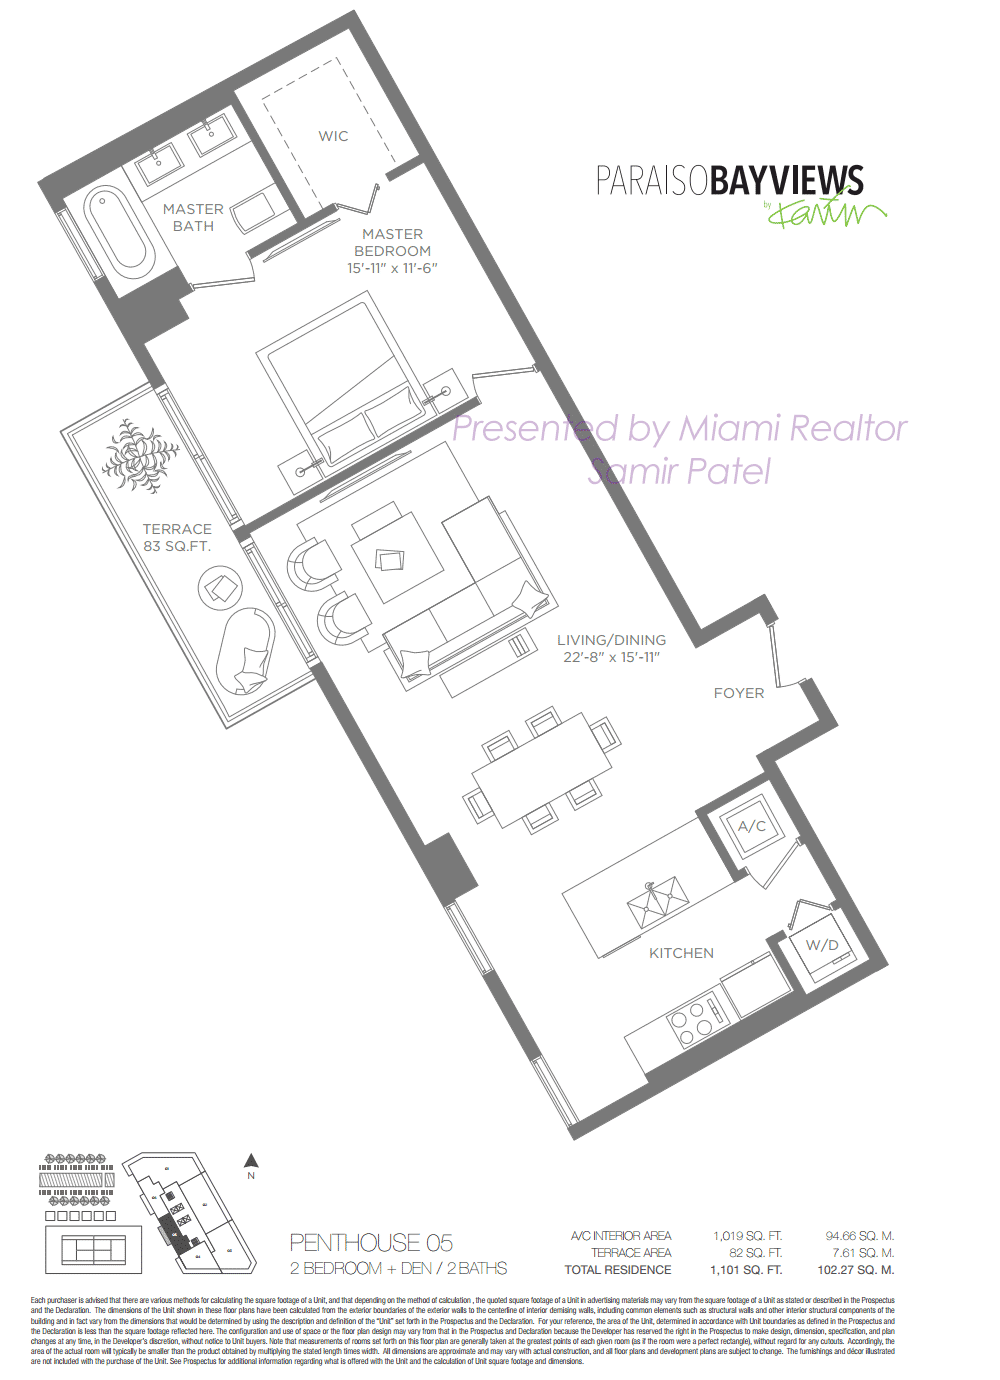 Floorplan of Paraiso Bayviews Condominium of Penthouse 05 Line in Building